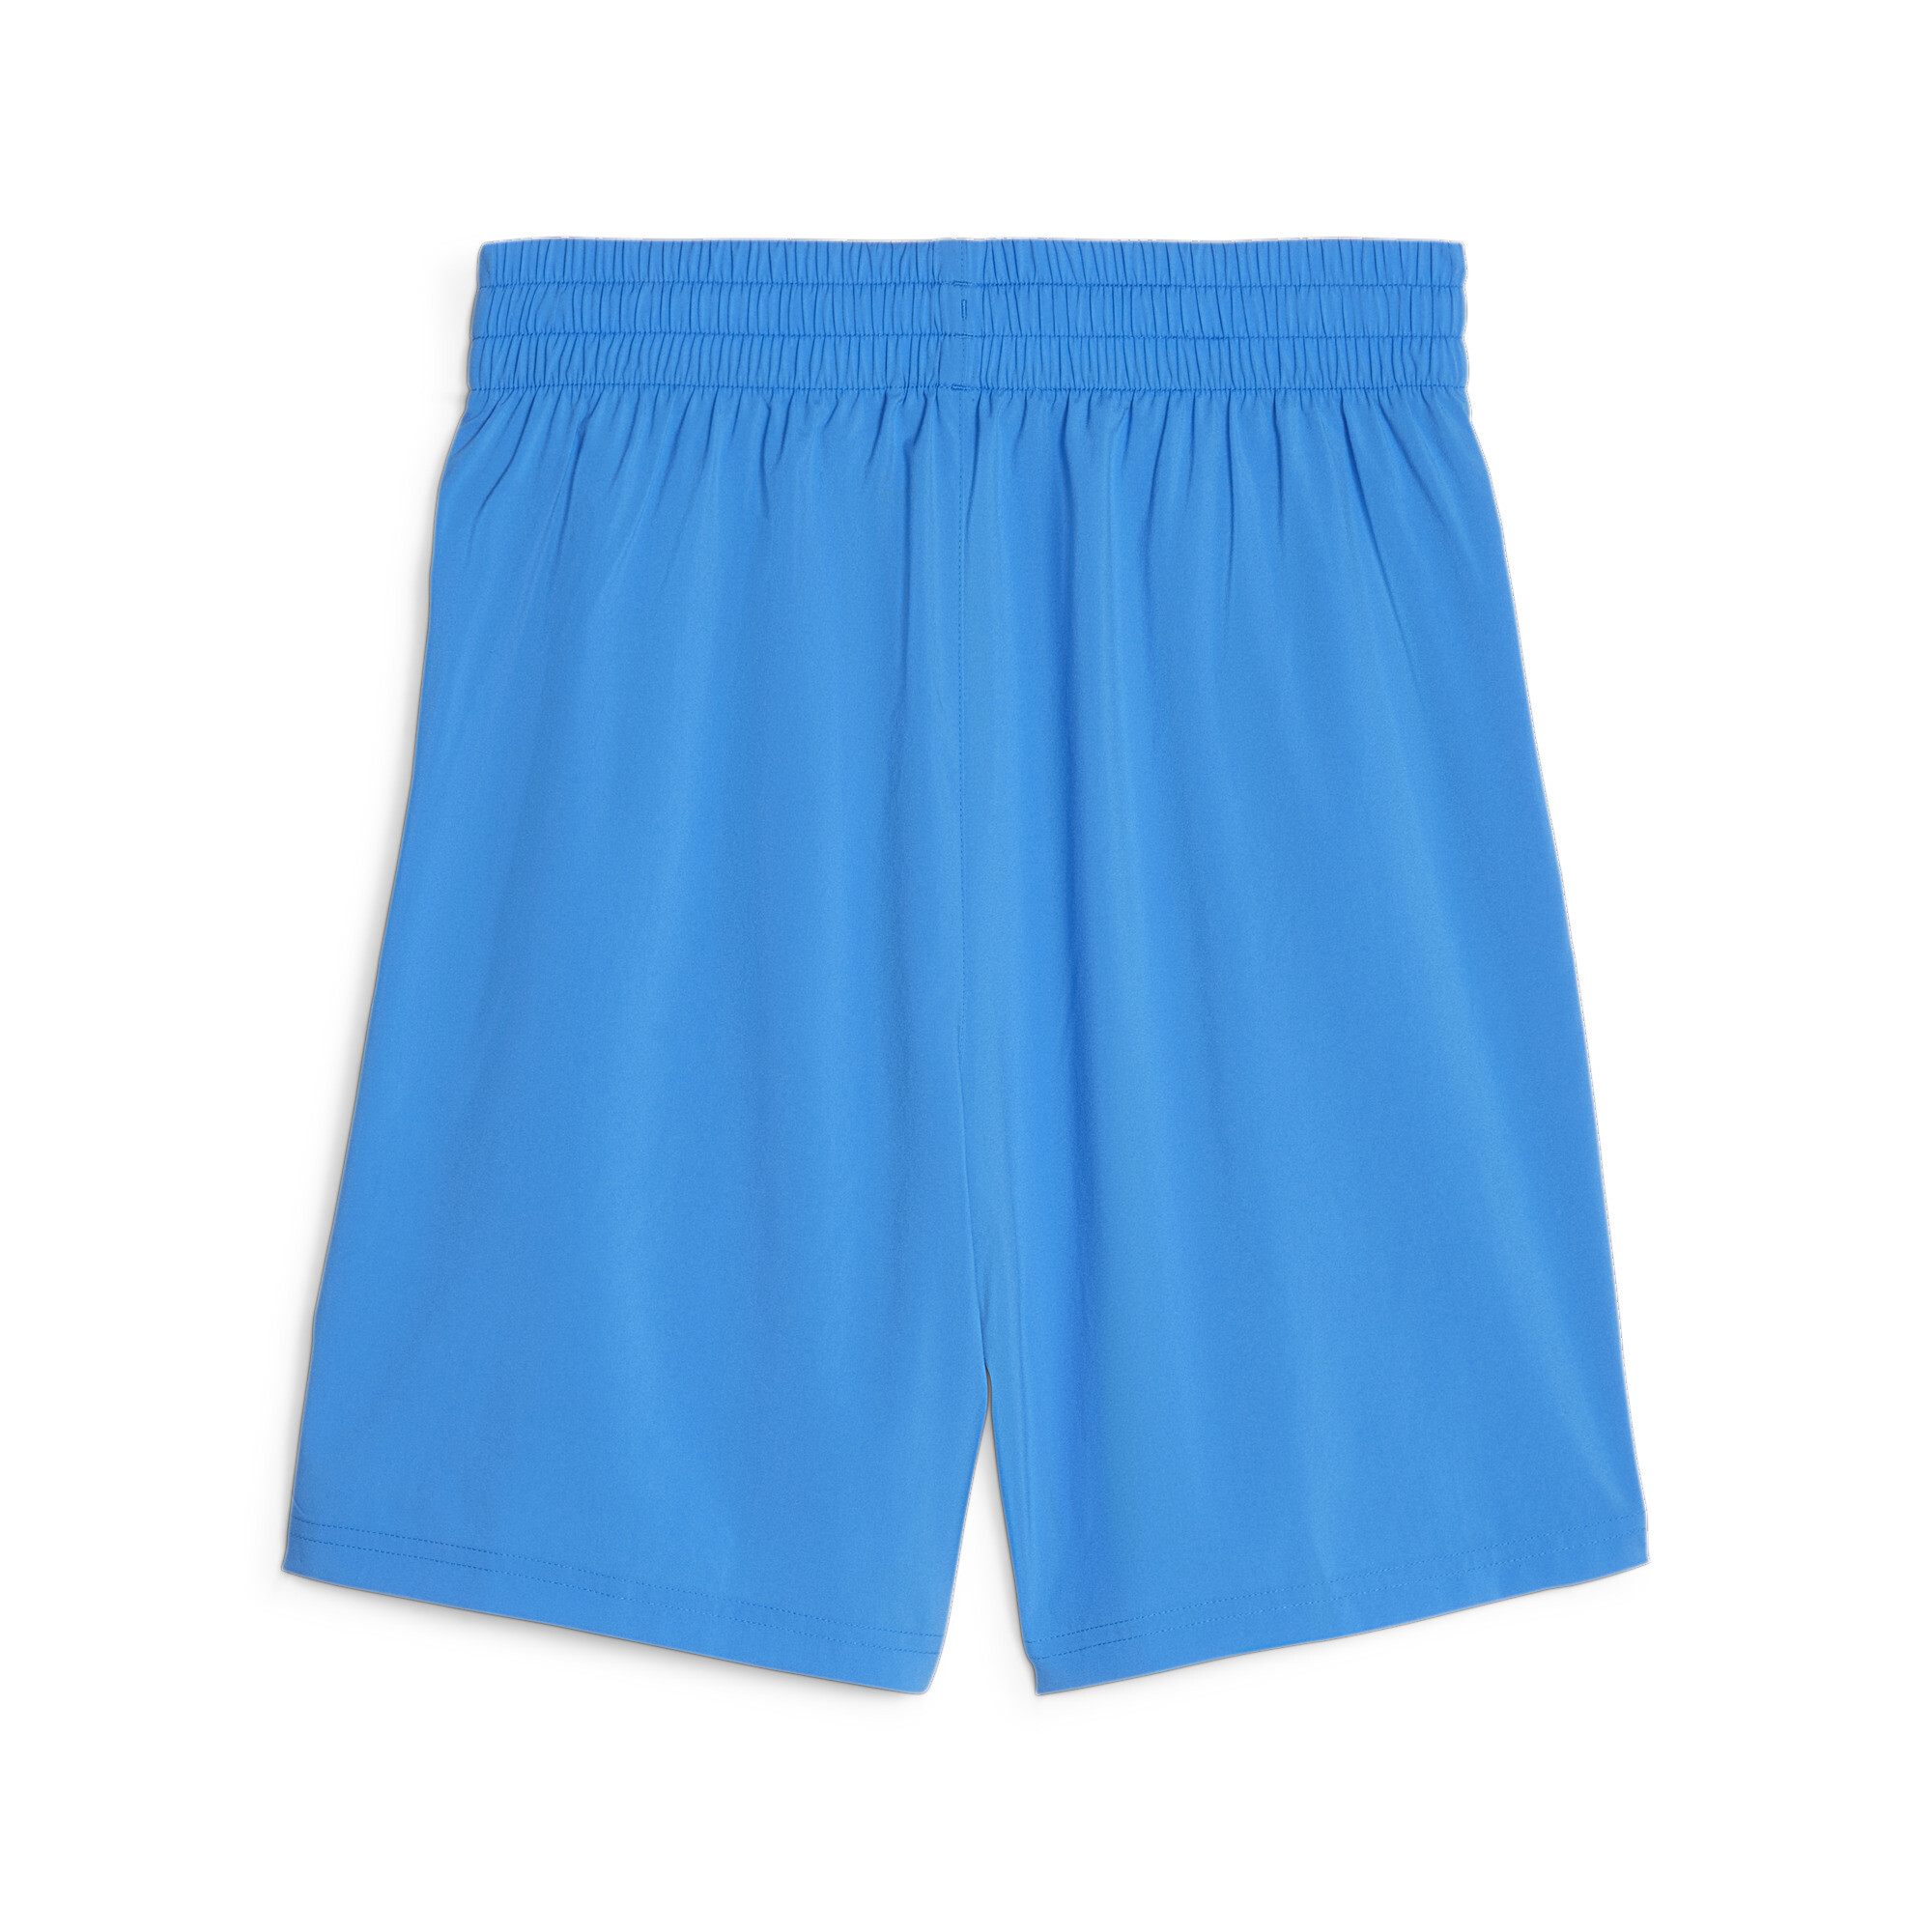 Men's Puma Favourite Blaster 7's Training Shorts, Blue, Size S, Clothing